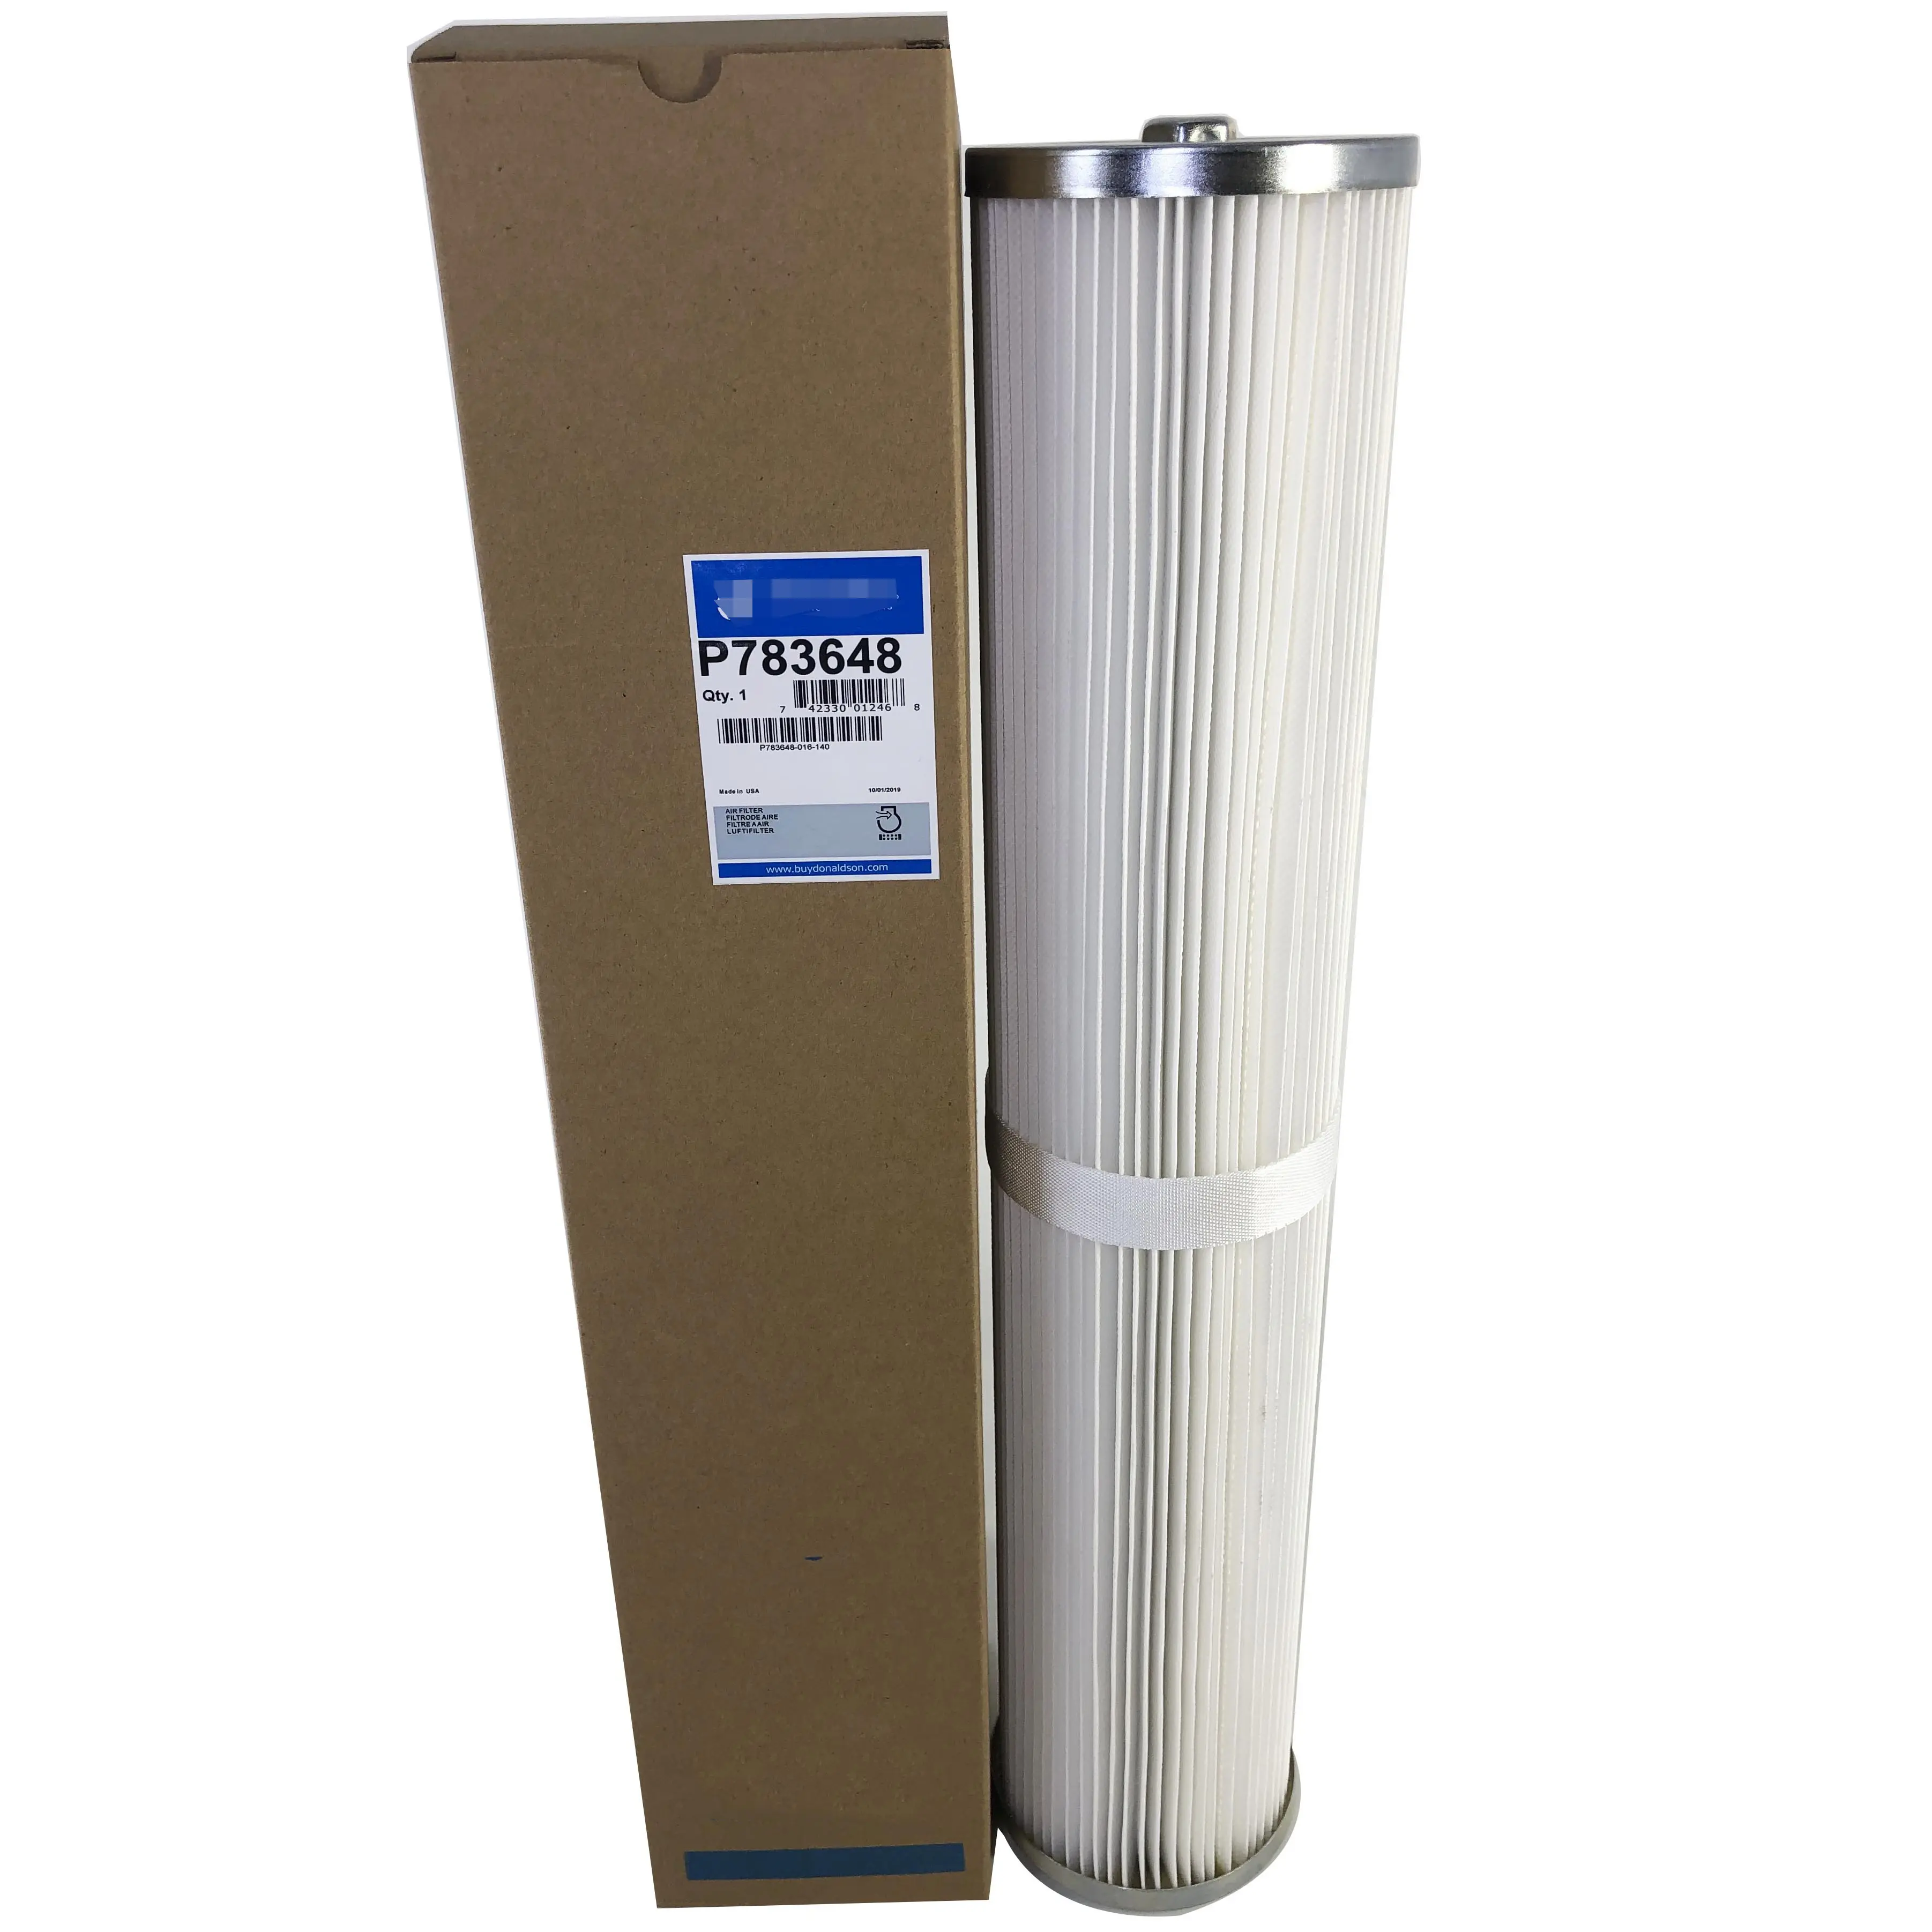 Hava filtresi toz toplayıcı filtre kartuşu P783648